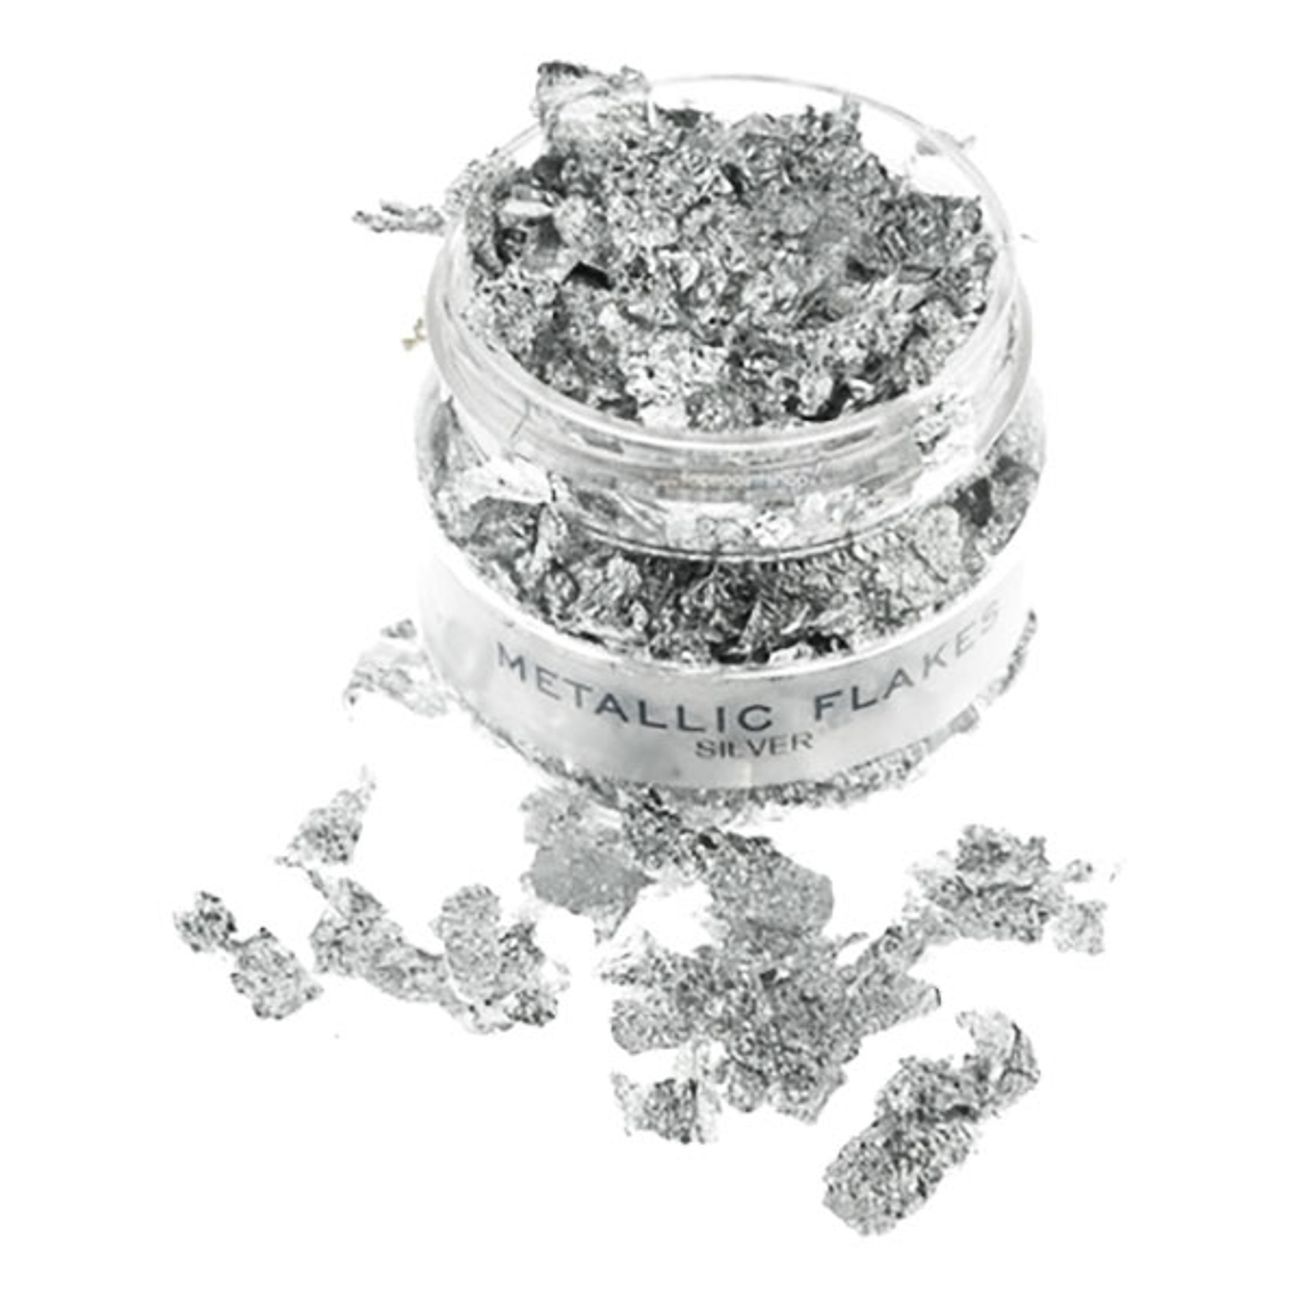 kryolan-metallic-glitter-flakes-silver-1